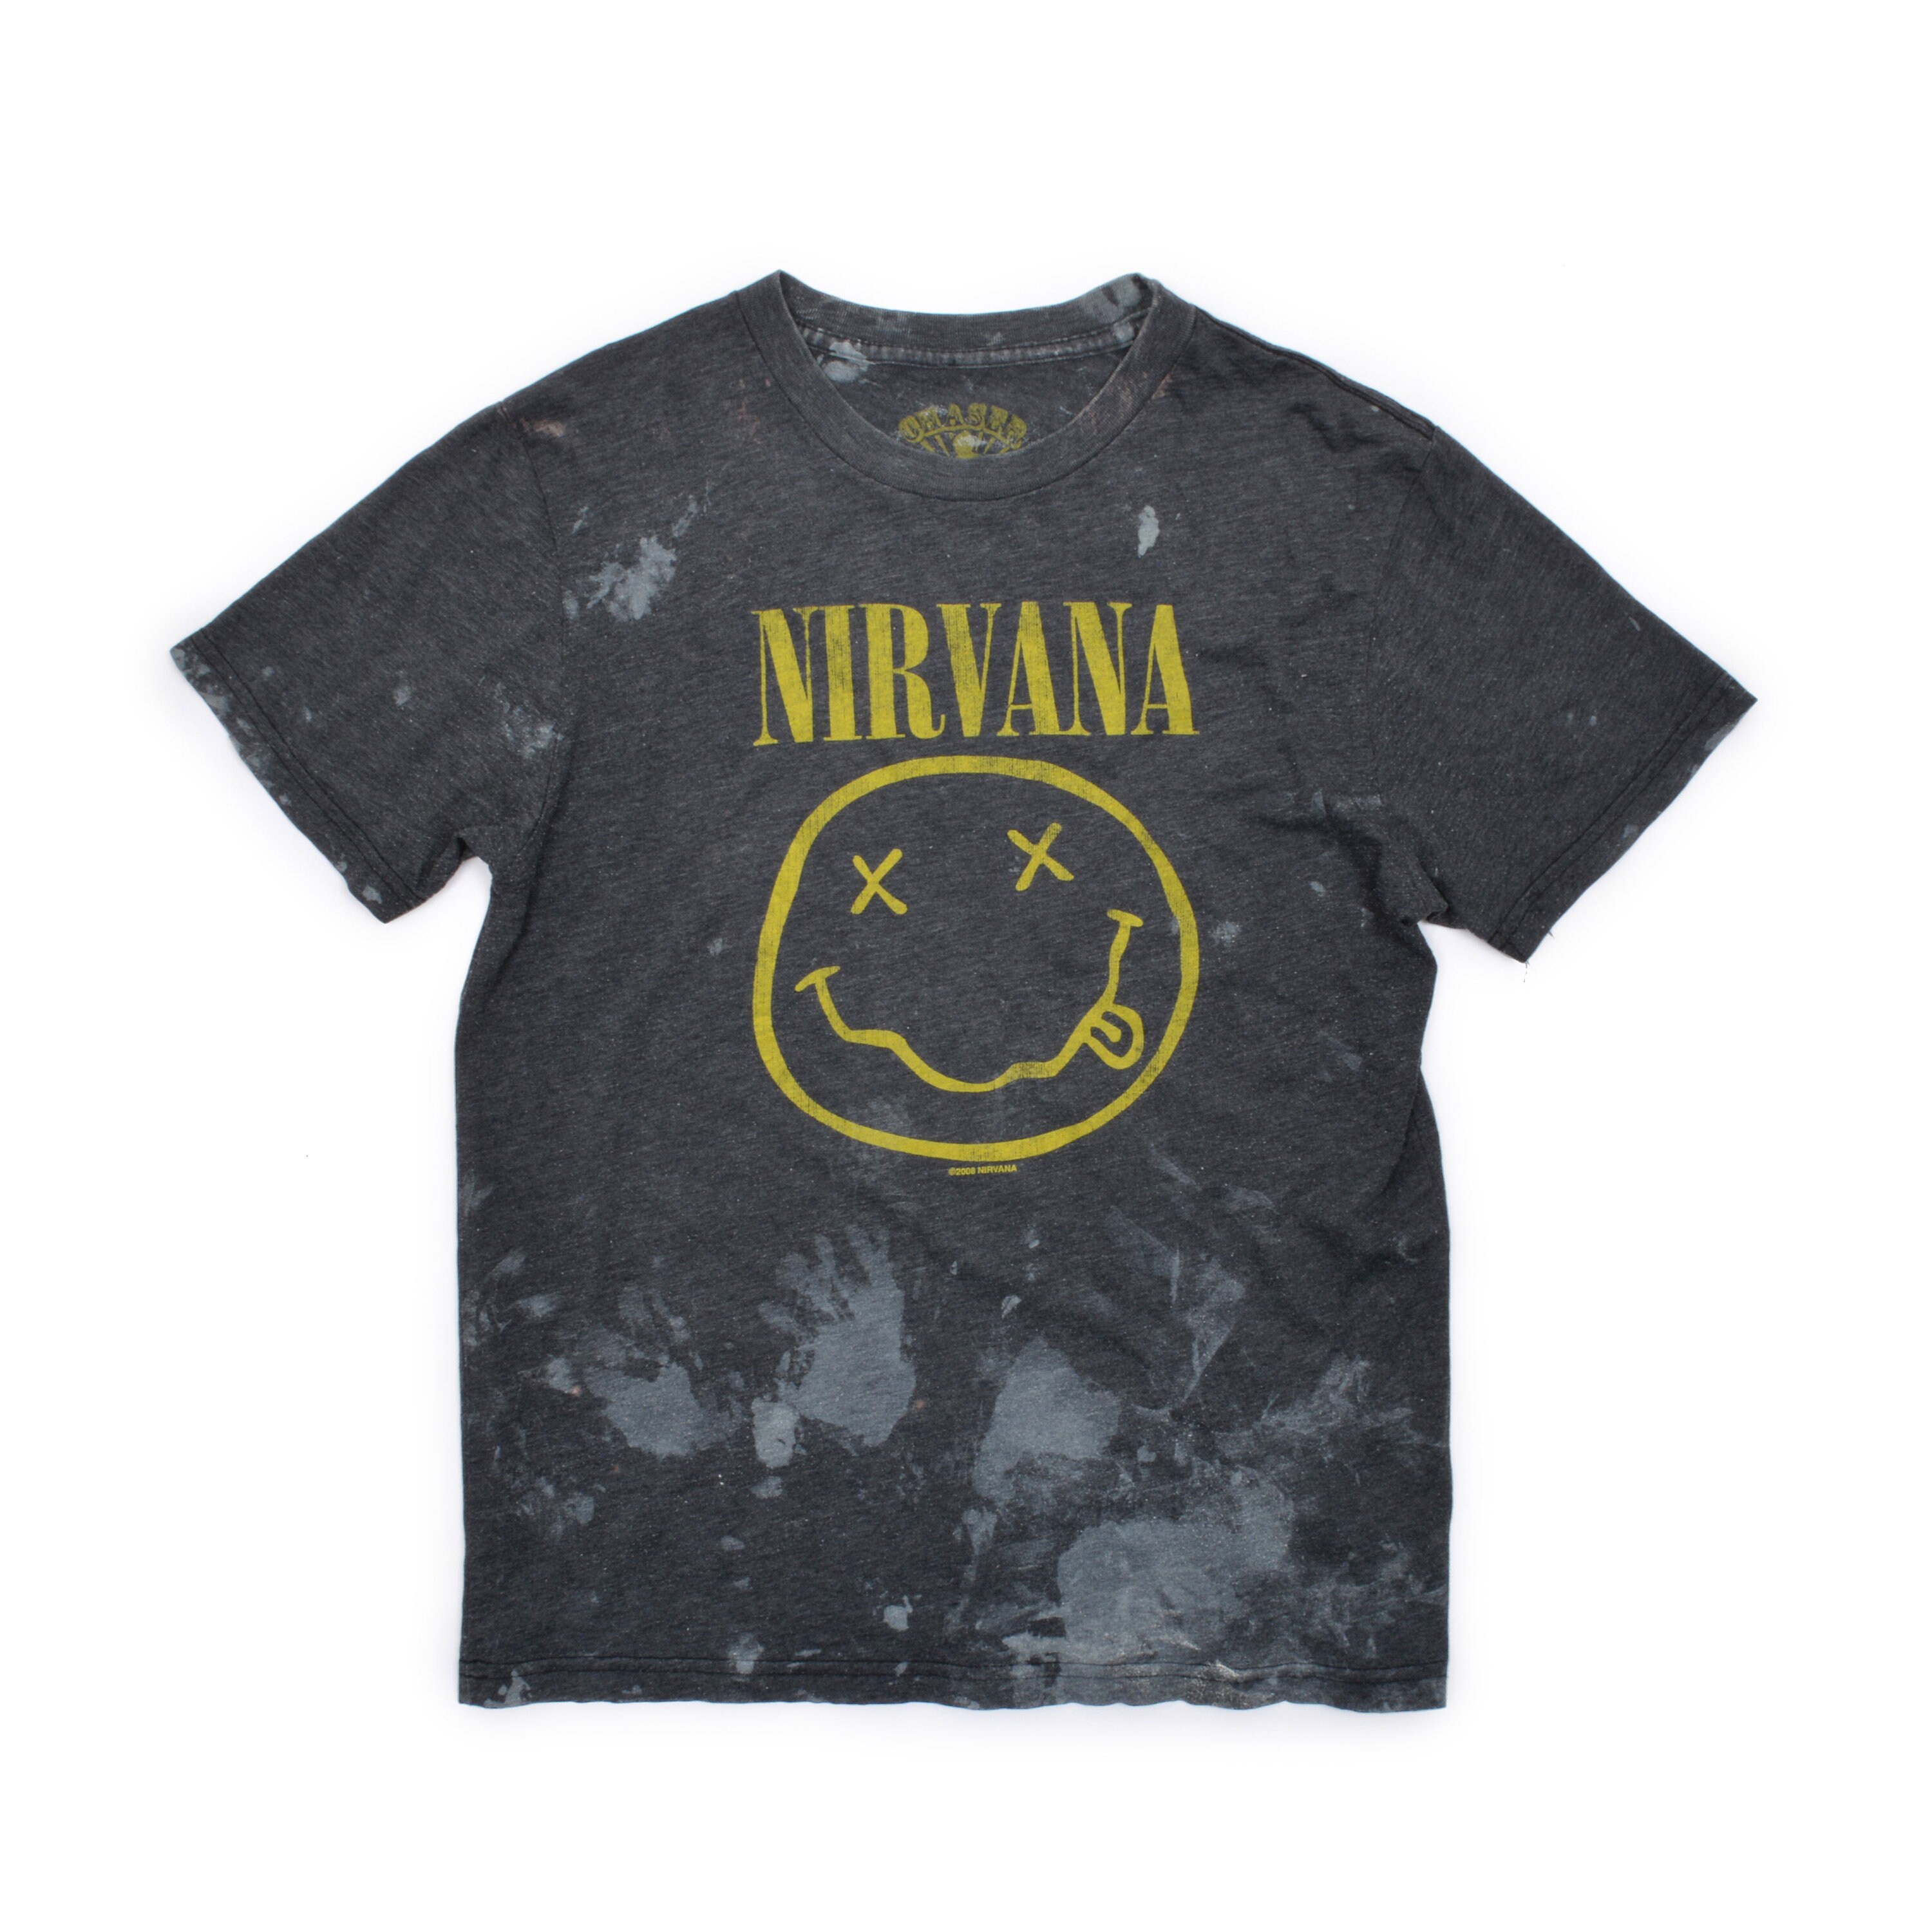 Nirvana Vestibule Bianca T-Shirt per Bambini 